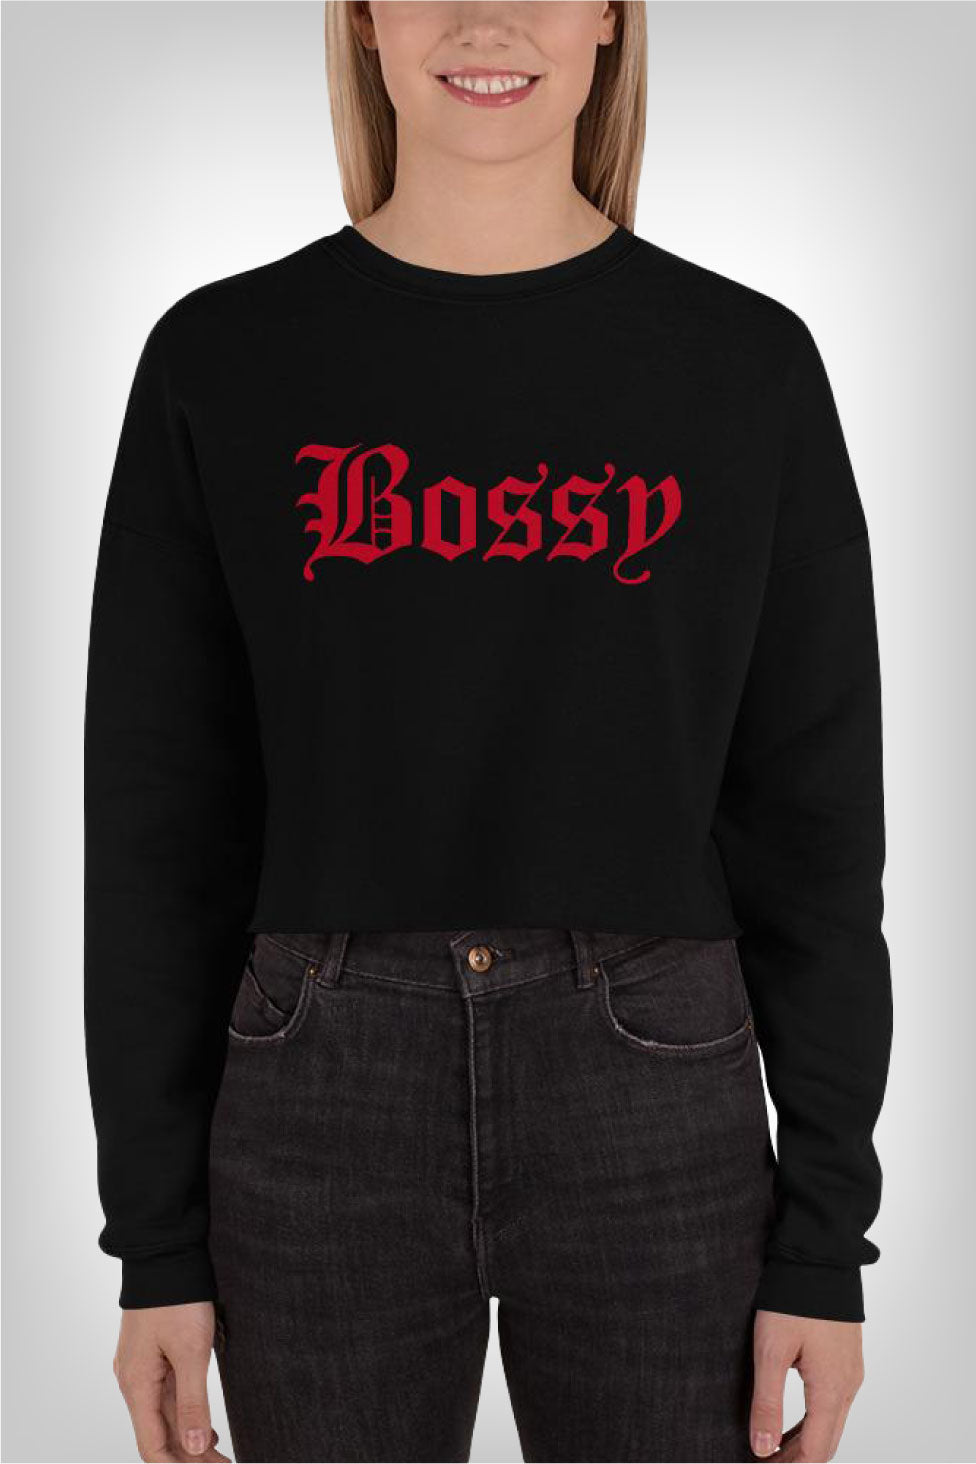 Women's Black Fleece Cropped Sweatshirt With Bossy Text Graphic